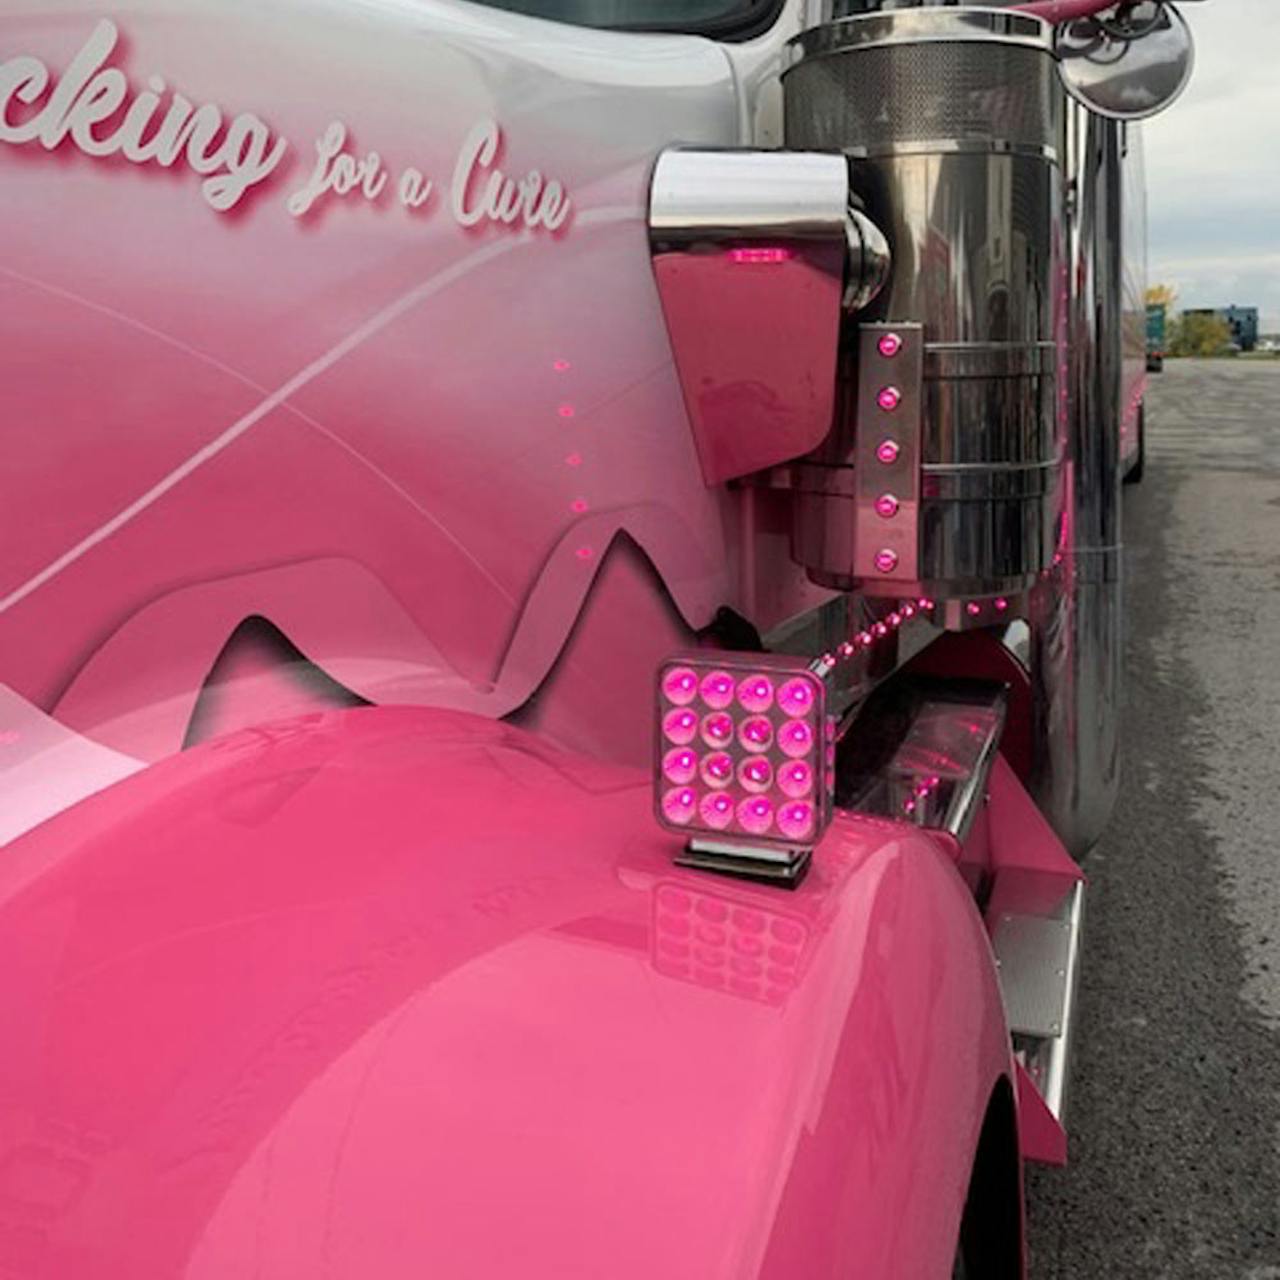 TRAILBLAZER NEON Pink neon peekaboo top with checkerboard sleeve